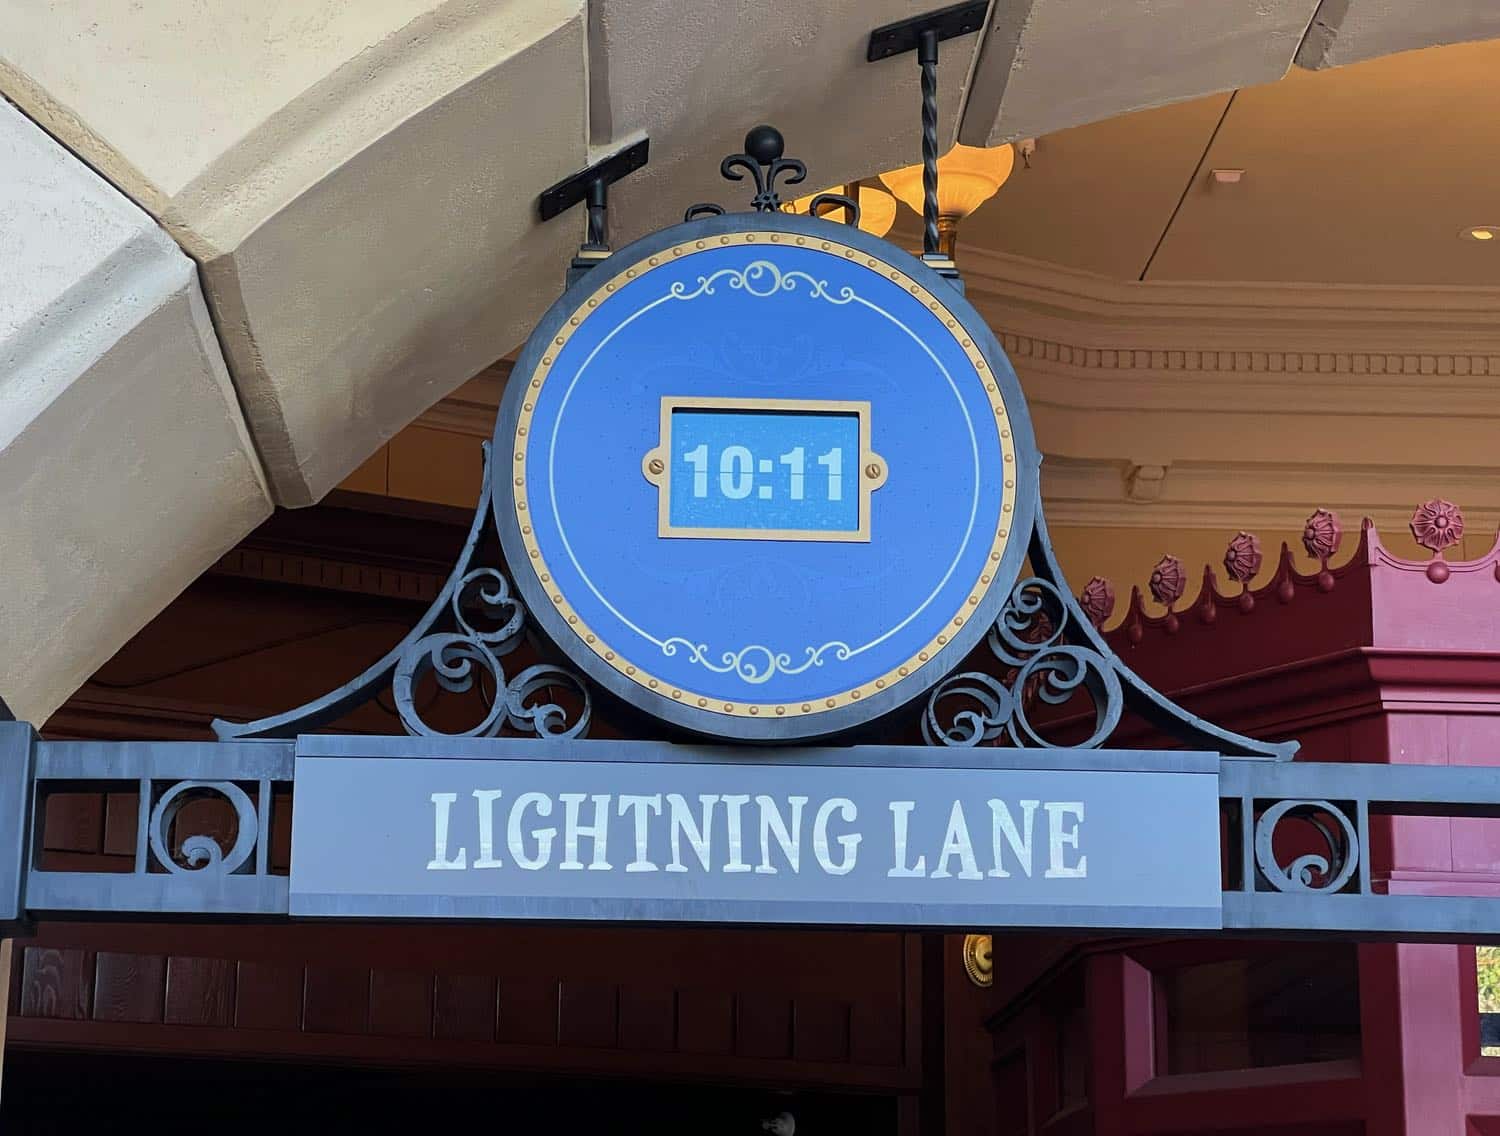 Lightning Lane at Disney World - Remy’s Ratatouille Adventure at EPCOT - Guide 2 Disney Genie